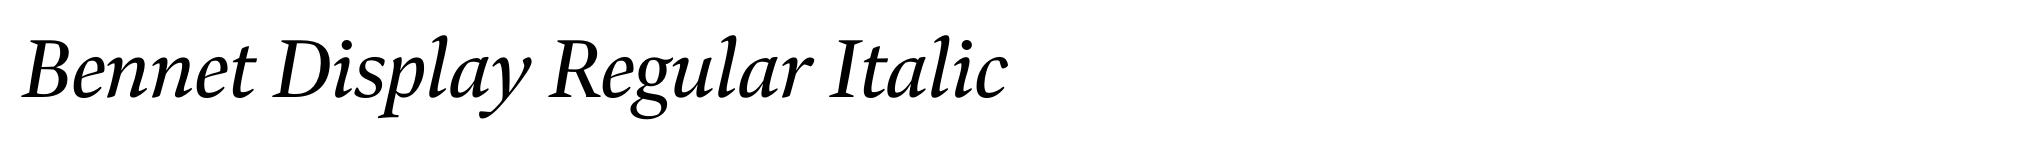 Bennet Display Regular Italic image